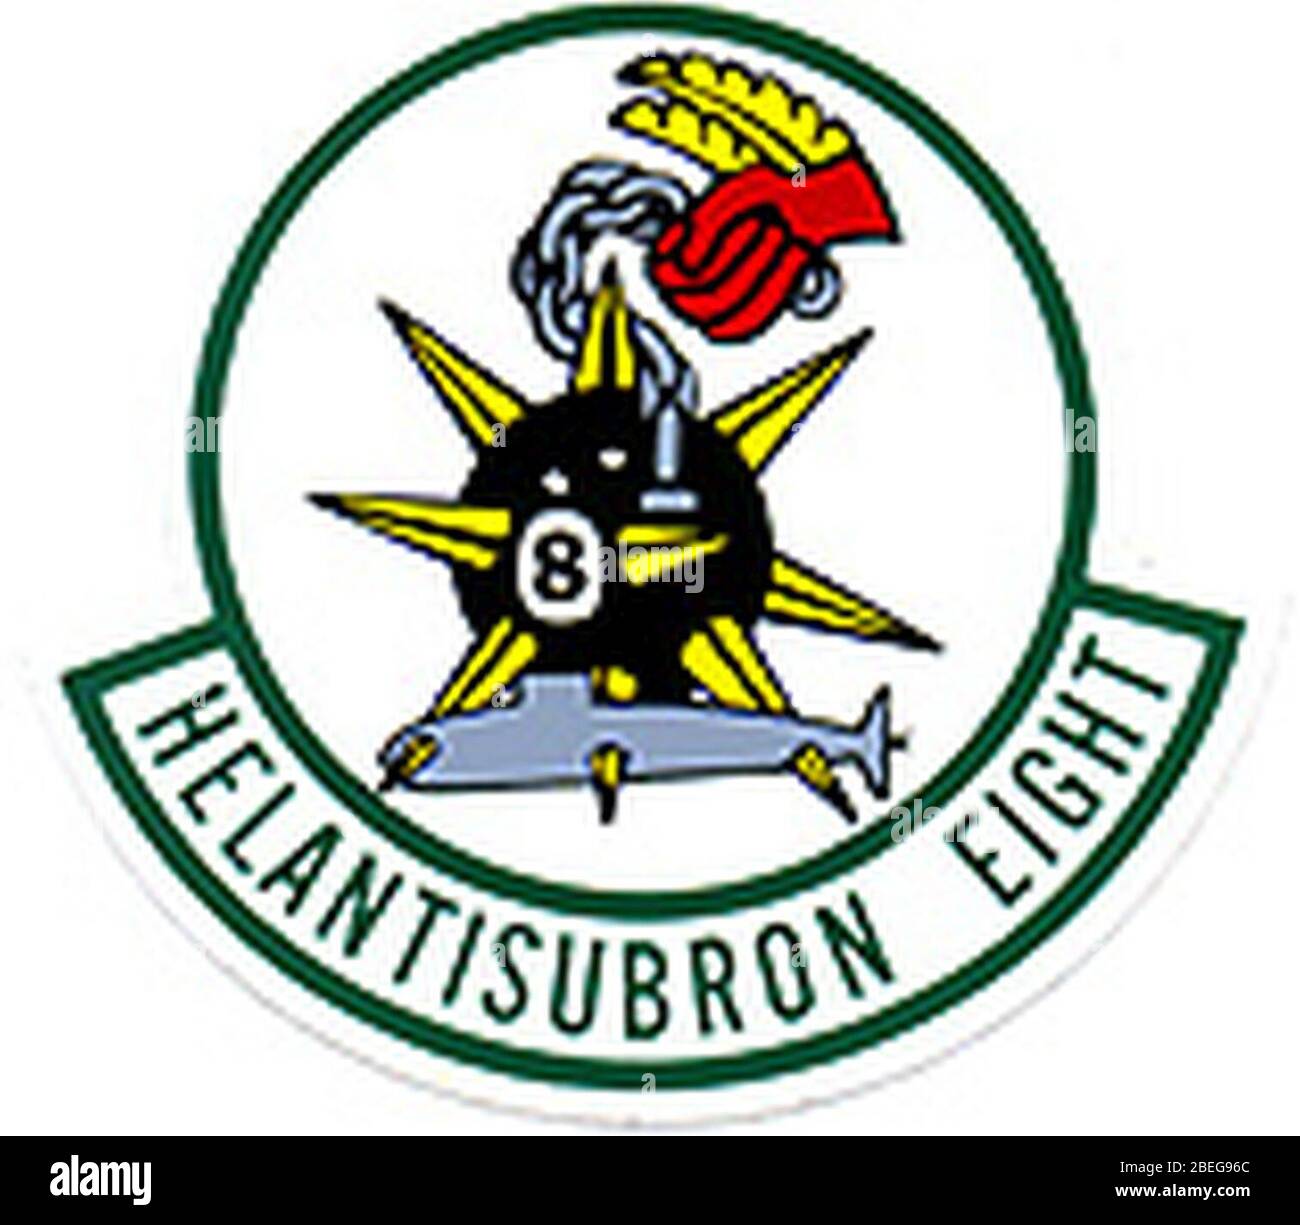 Helicopter Anti-Submarine Squadron 8 (United States Navy - insignia). Stock Photo